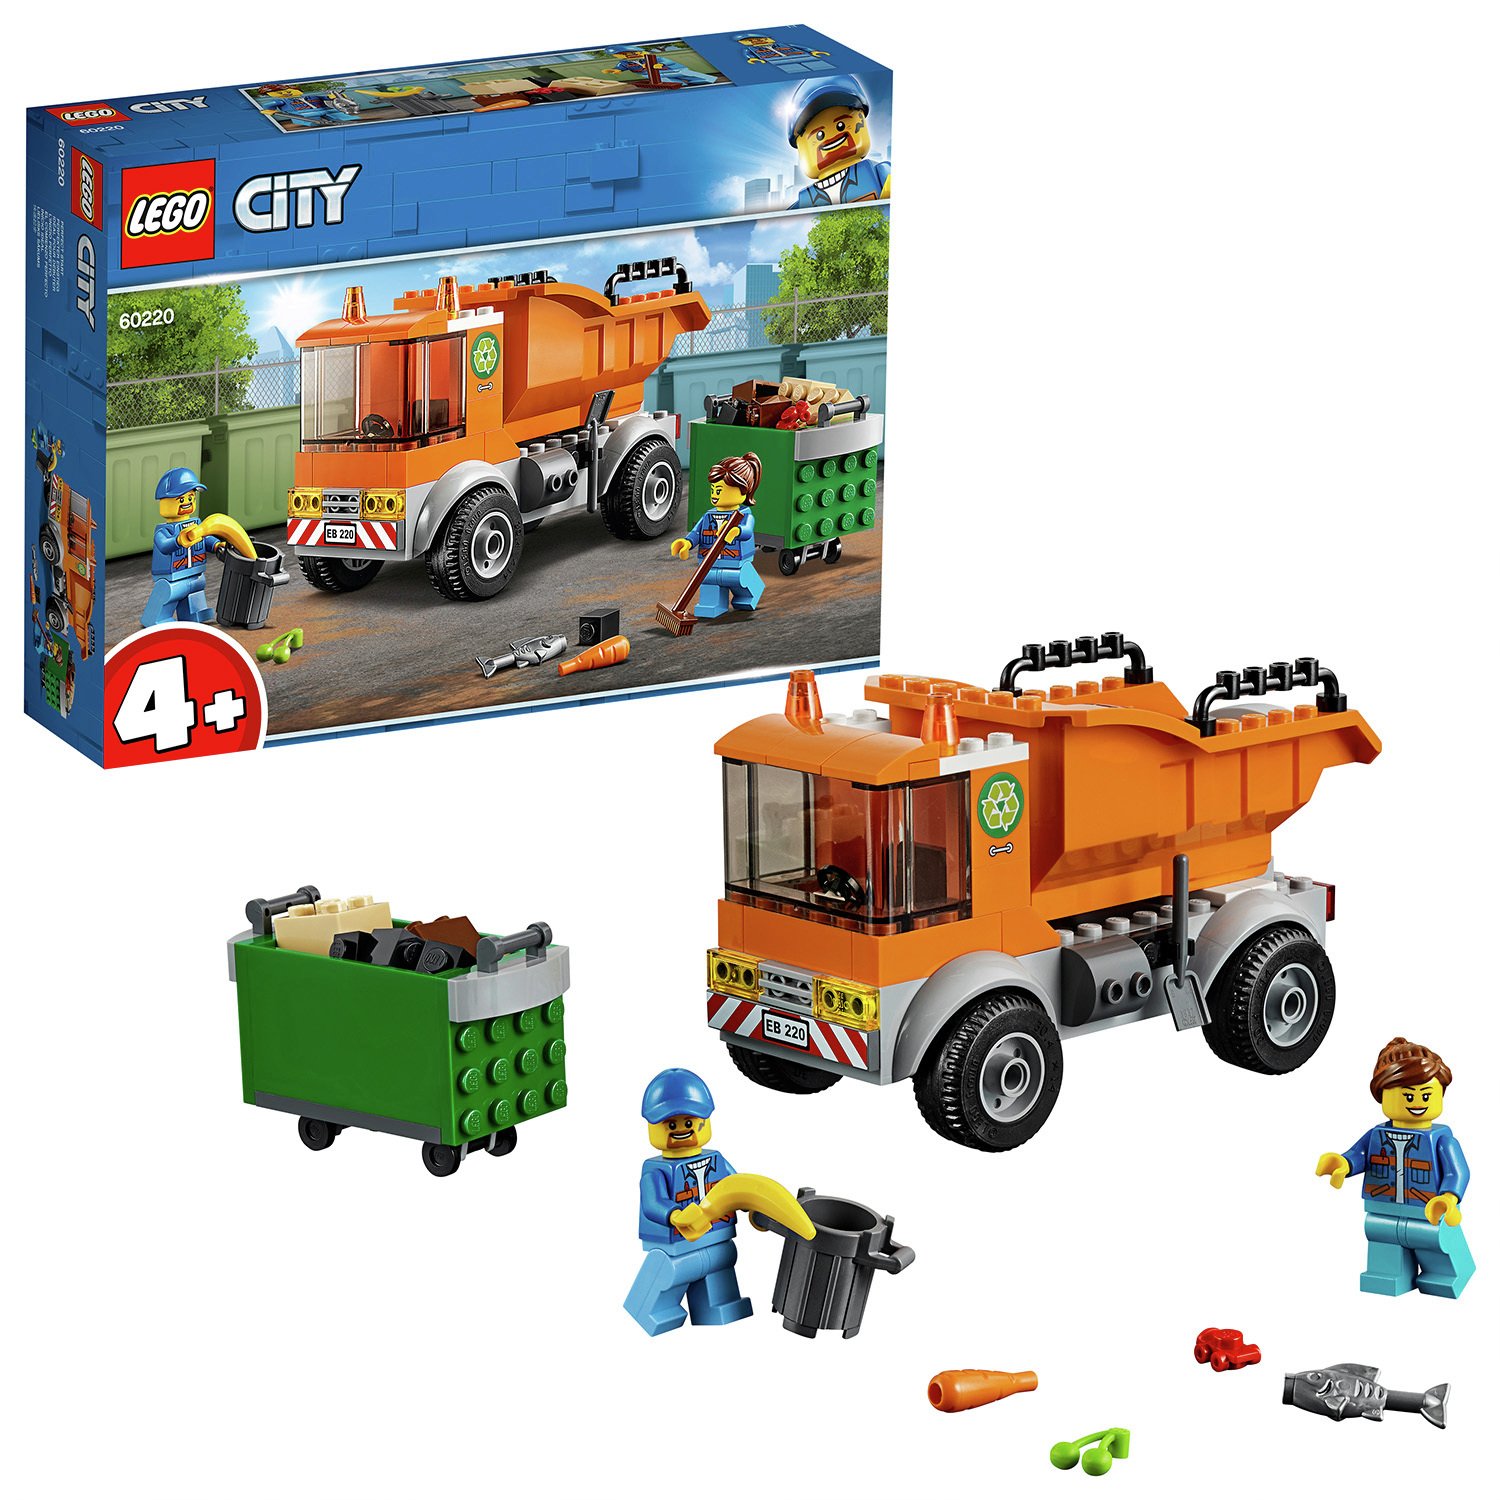 lego trucks to build